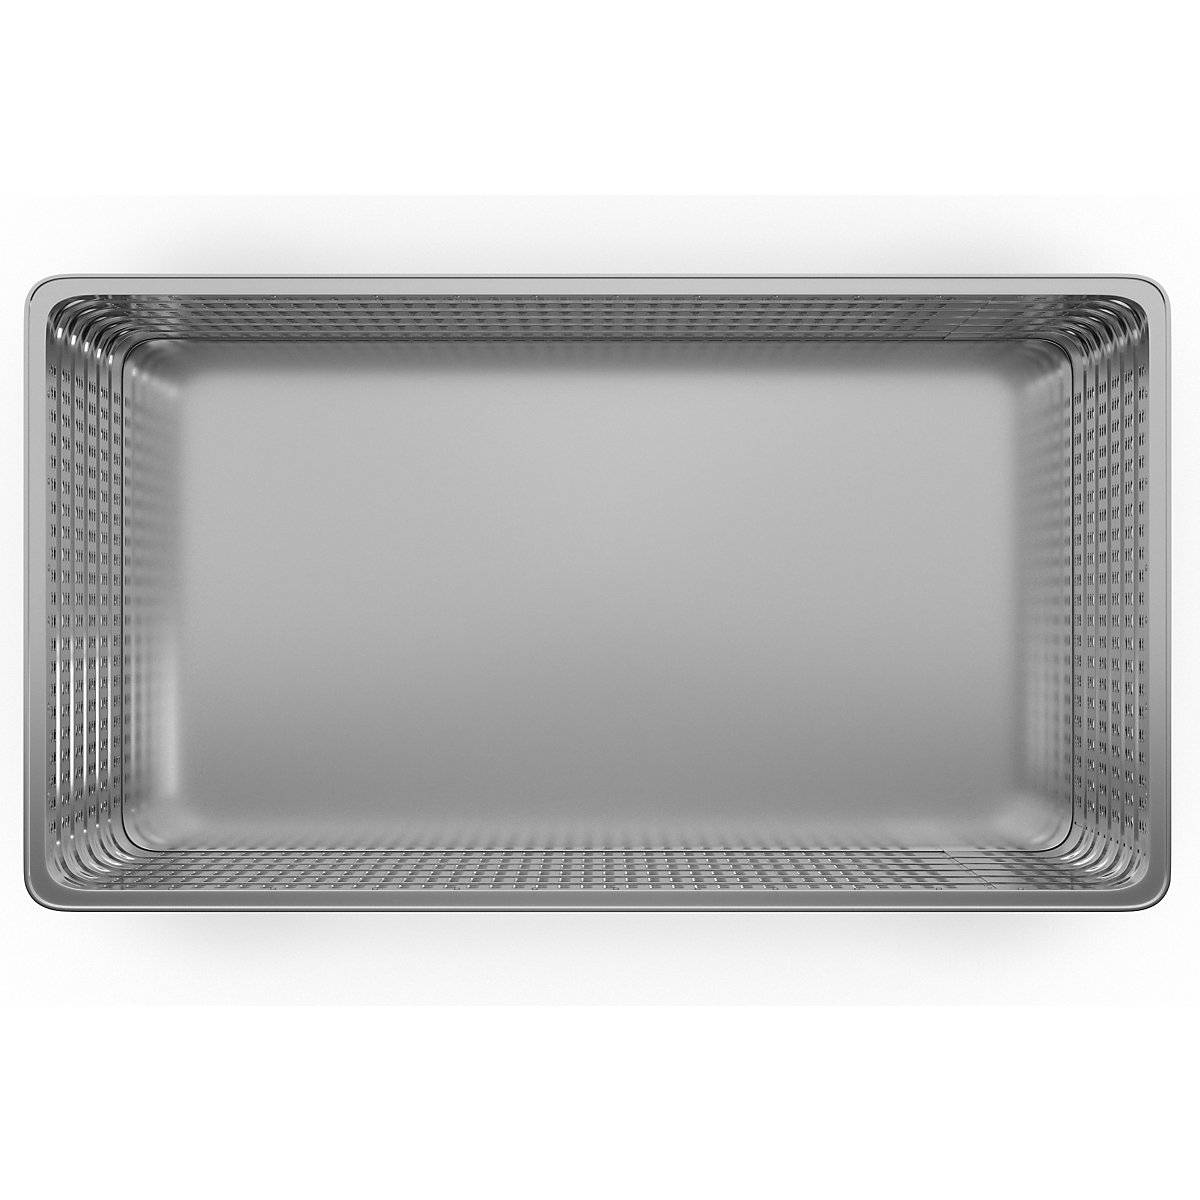 Aluminium bakwagen – Gmöhling (Productafbeelding 7)-6